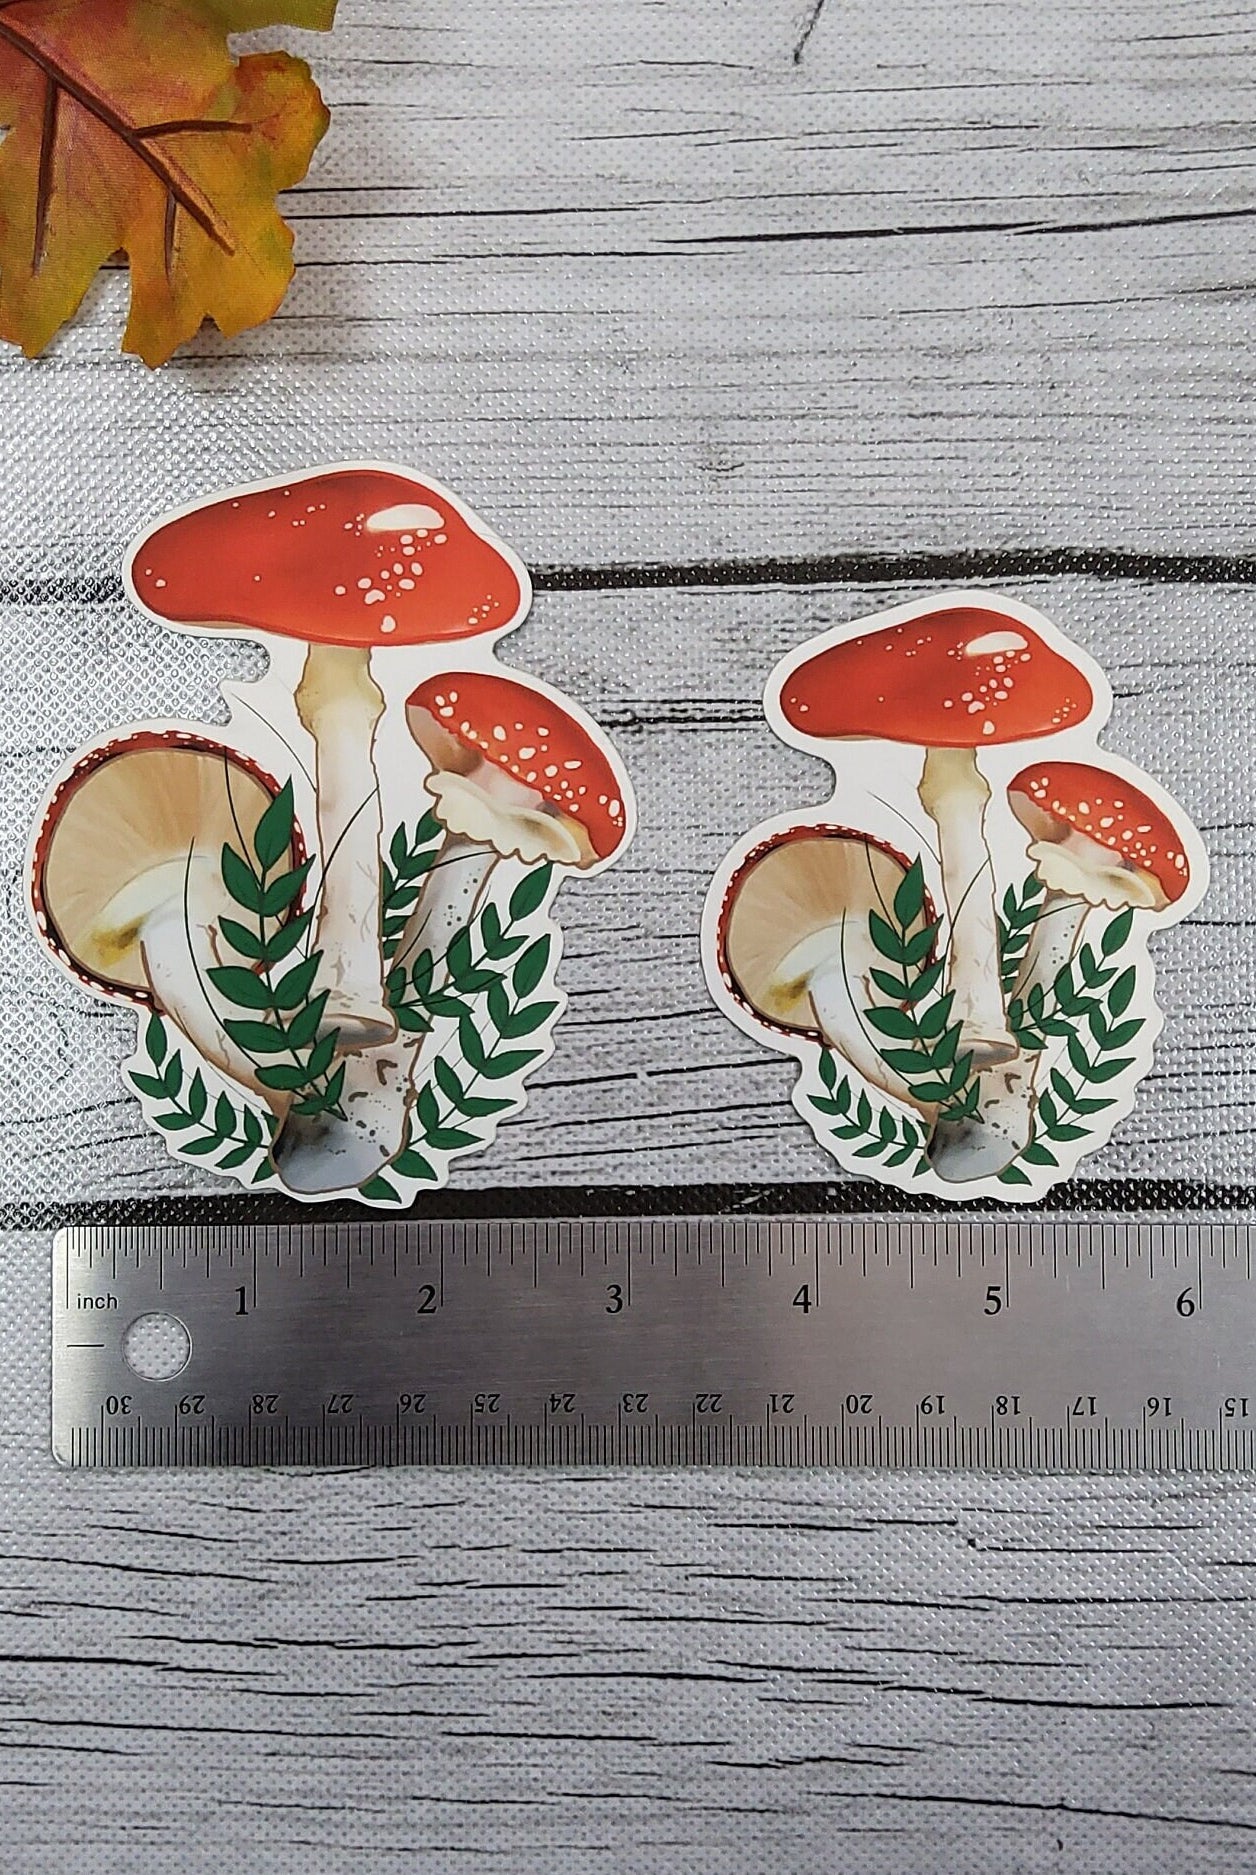 MATTE STICKER: Red Mushroom Forest Floor Aesthetic Sticker , Red Mushroom Sticker , Red Forest Mushroom Sticker , Mushroom Stickers